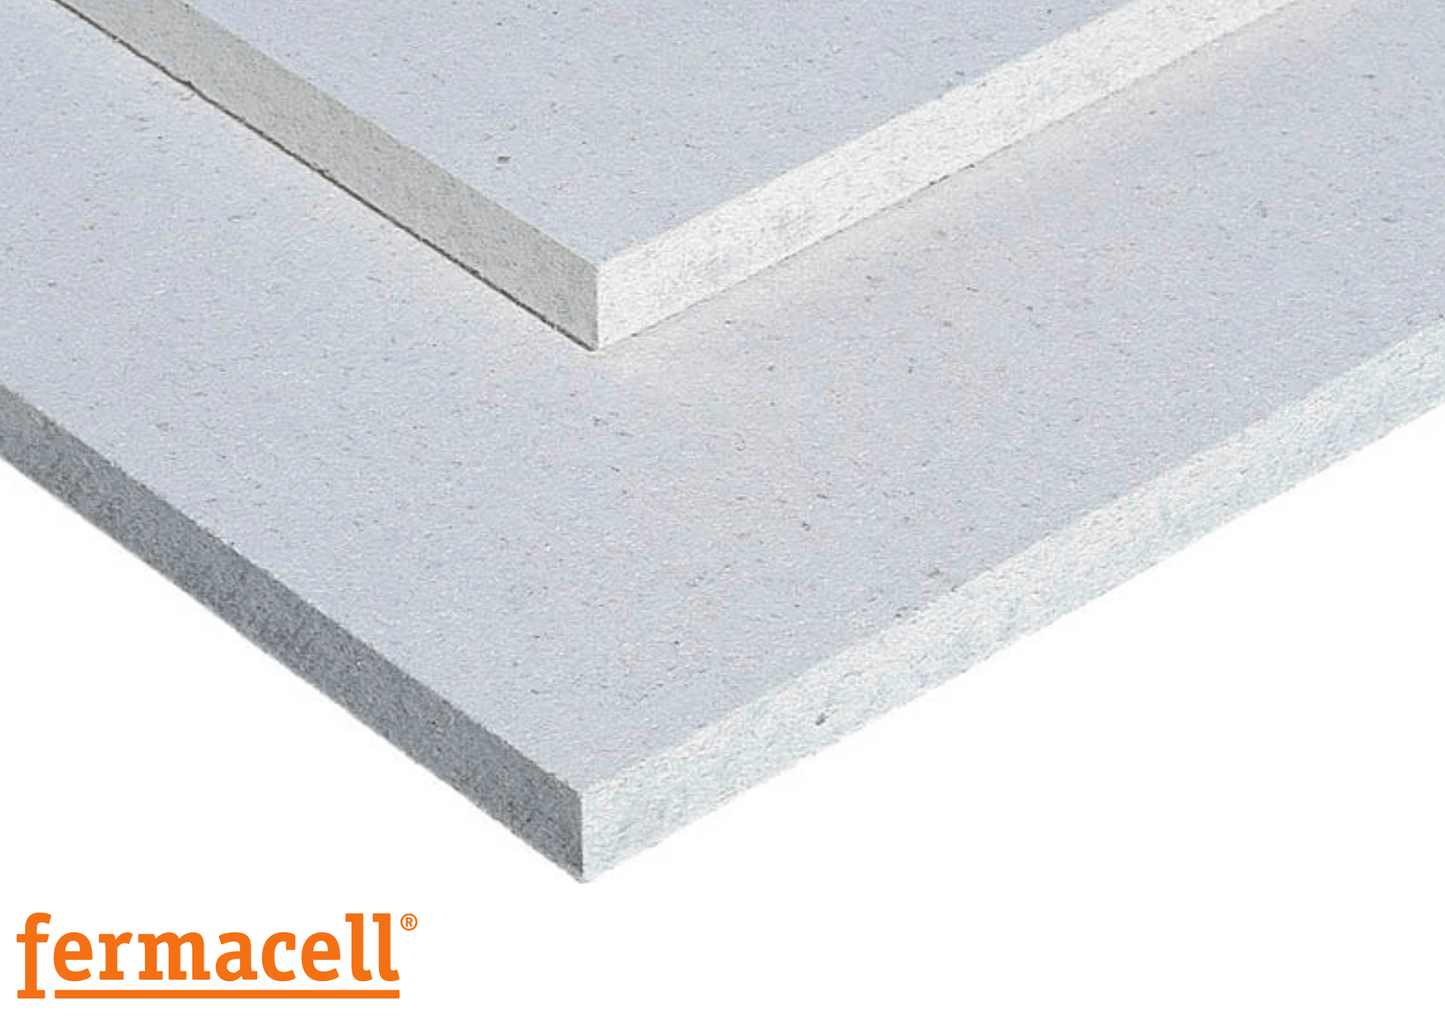 Fermacell Fermacell® Flooring 2e11 1500 x 500mm x 20mm